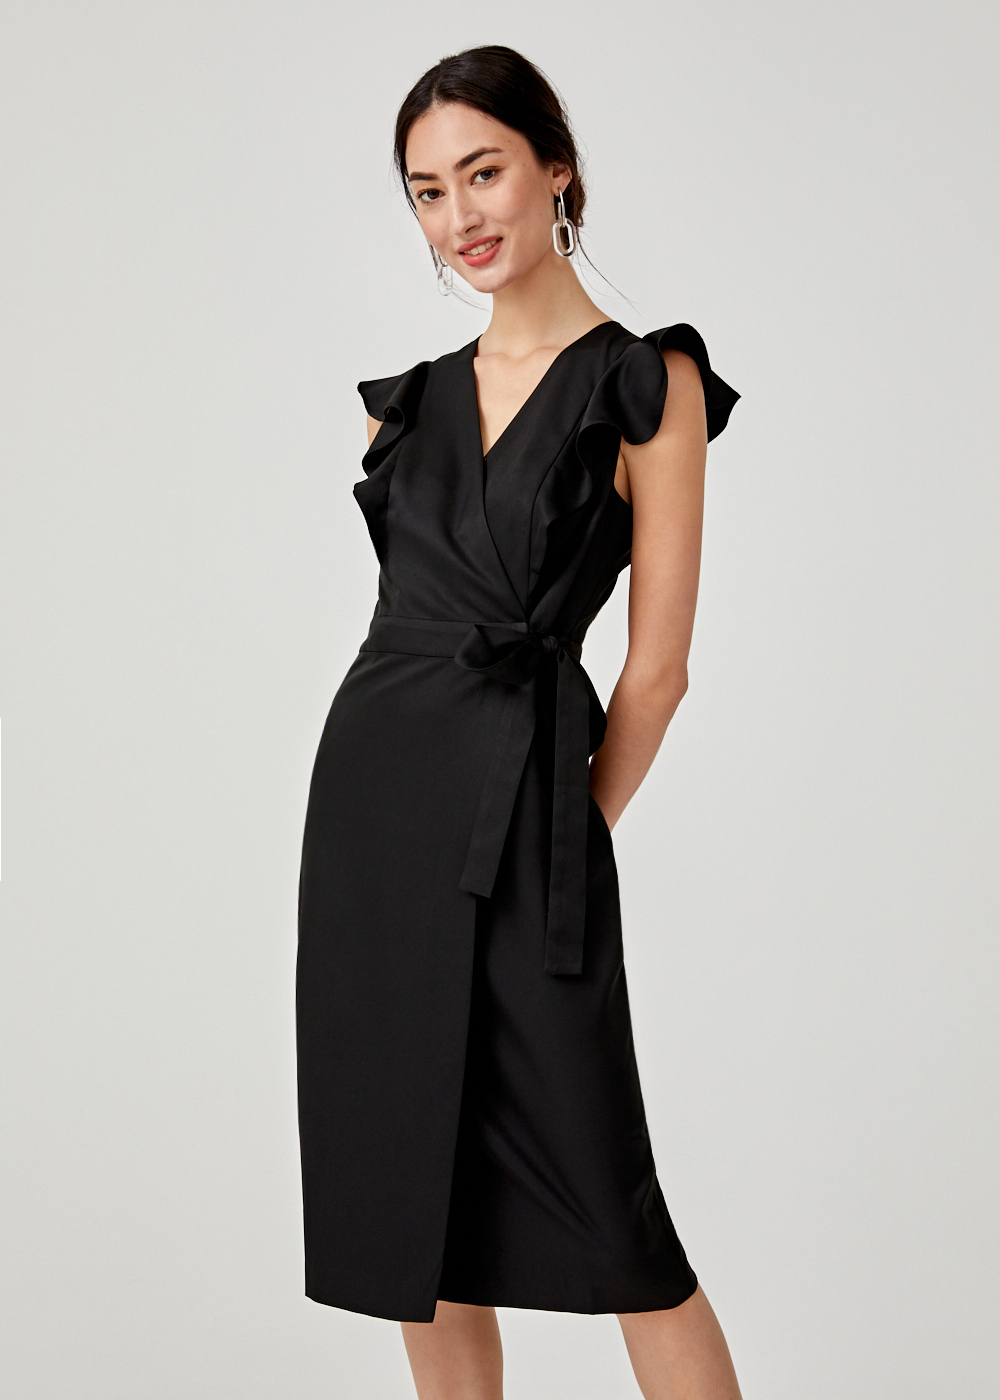 Buy Akina Ruffle Sleeve Wrap Dress @ Love, Bonito Singapore | Shop ...